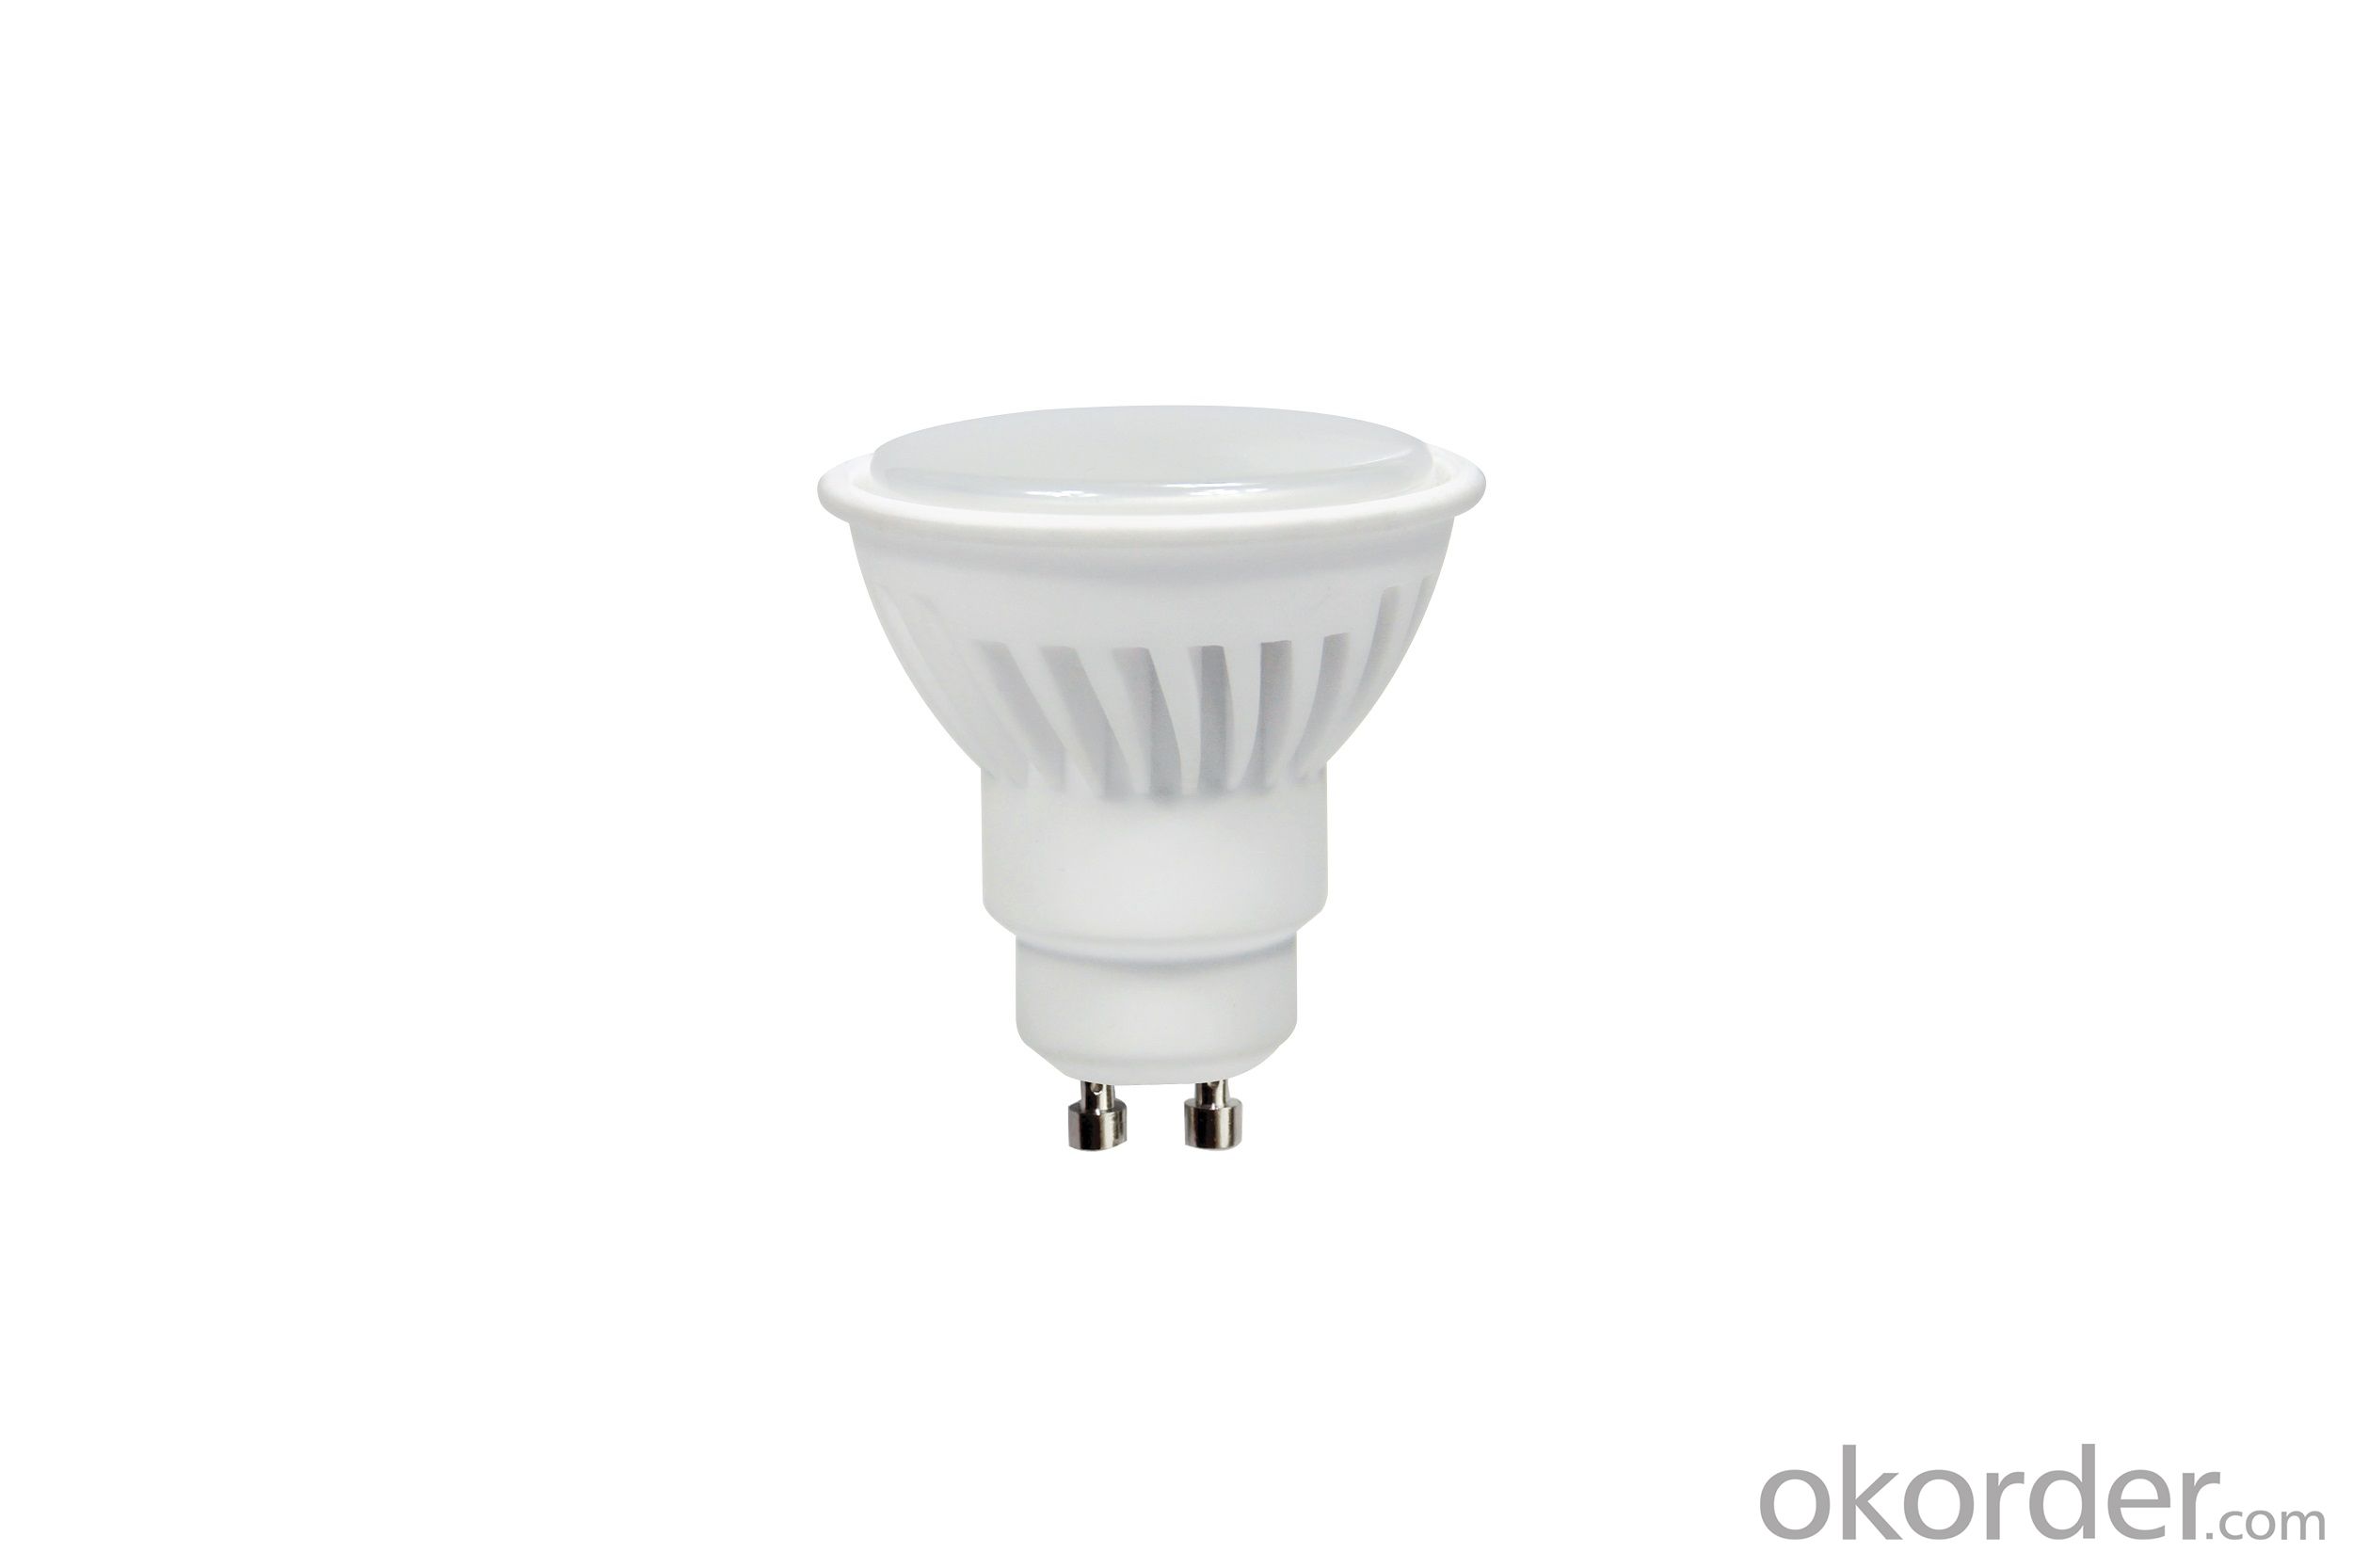 LED  Spot Light  GU10 5W SMD2835 High CRI High Lumen